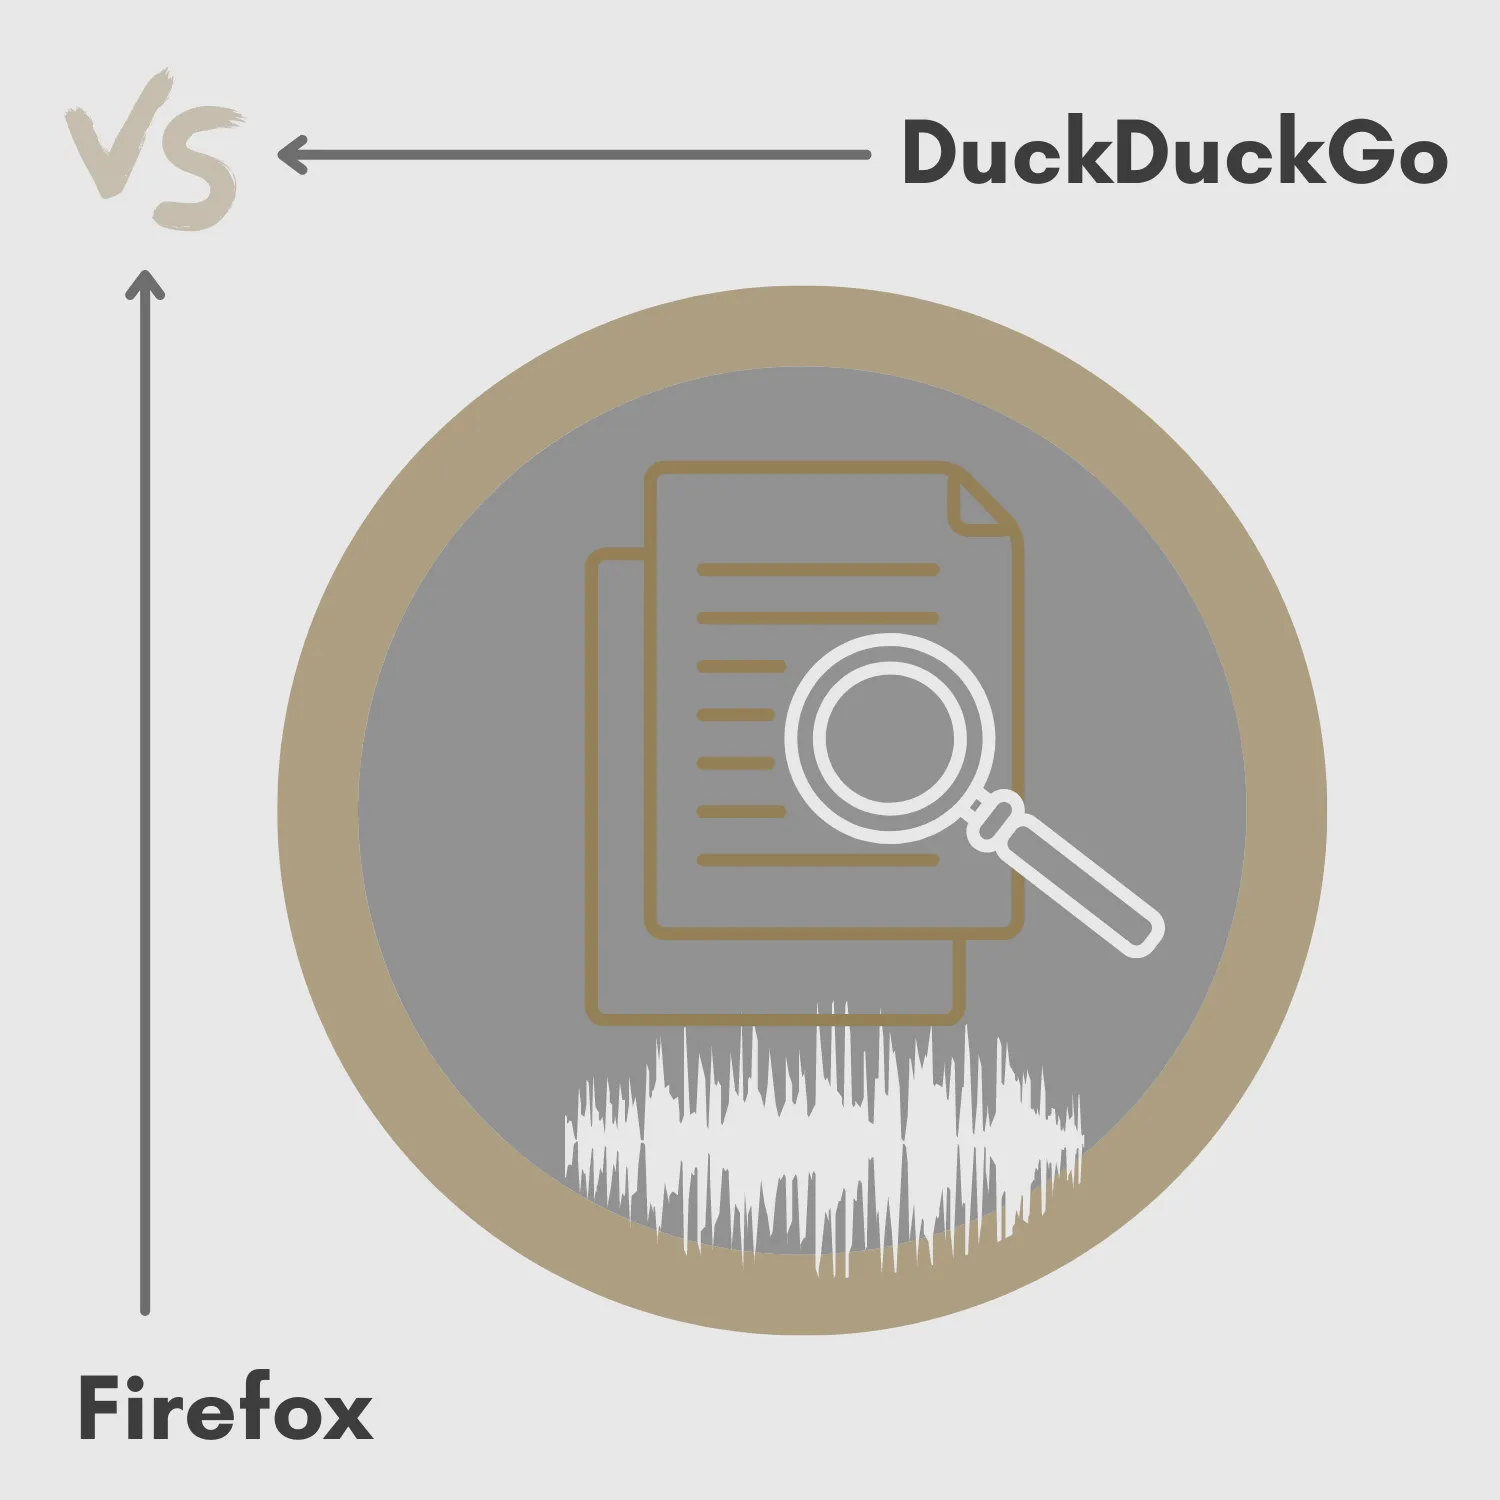 DuckDuckGo vs. Firefox